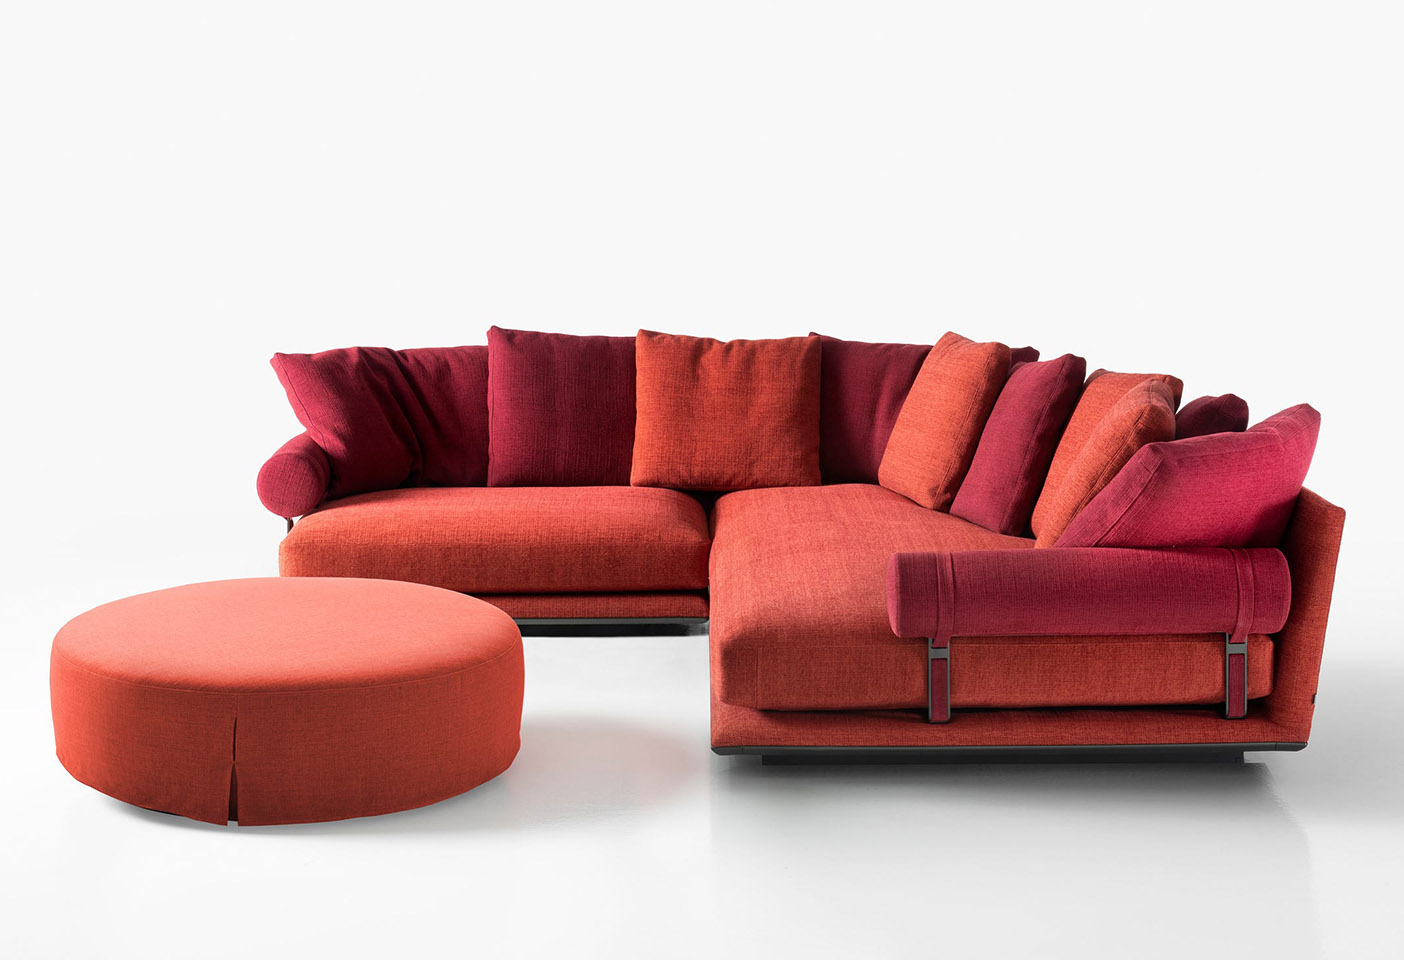 The Noonu sofa designed by Antonio Citterio for B&B Italia. Photo c/o B&B Italia. 